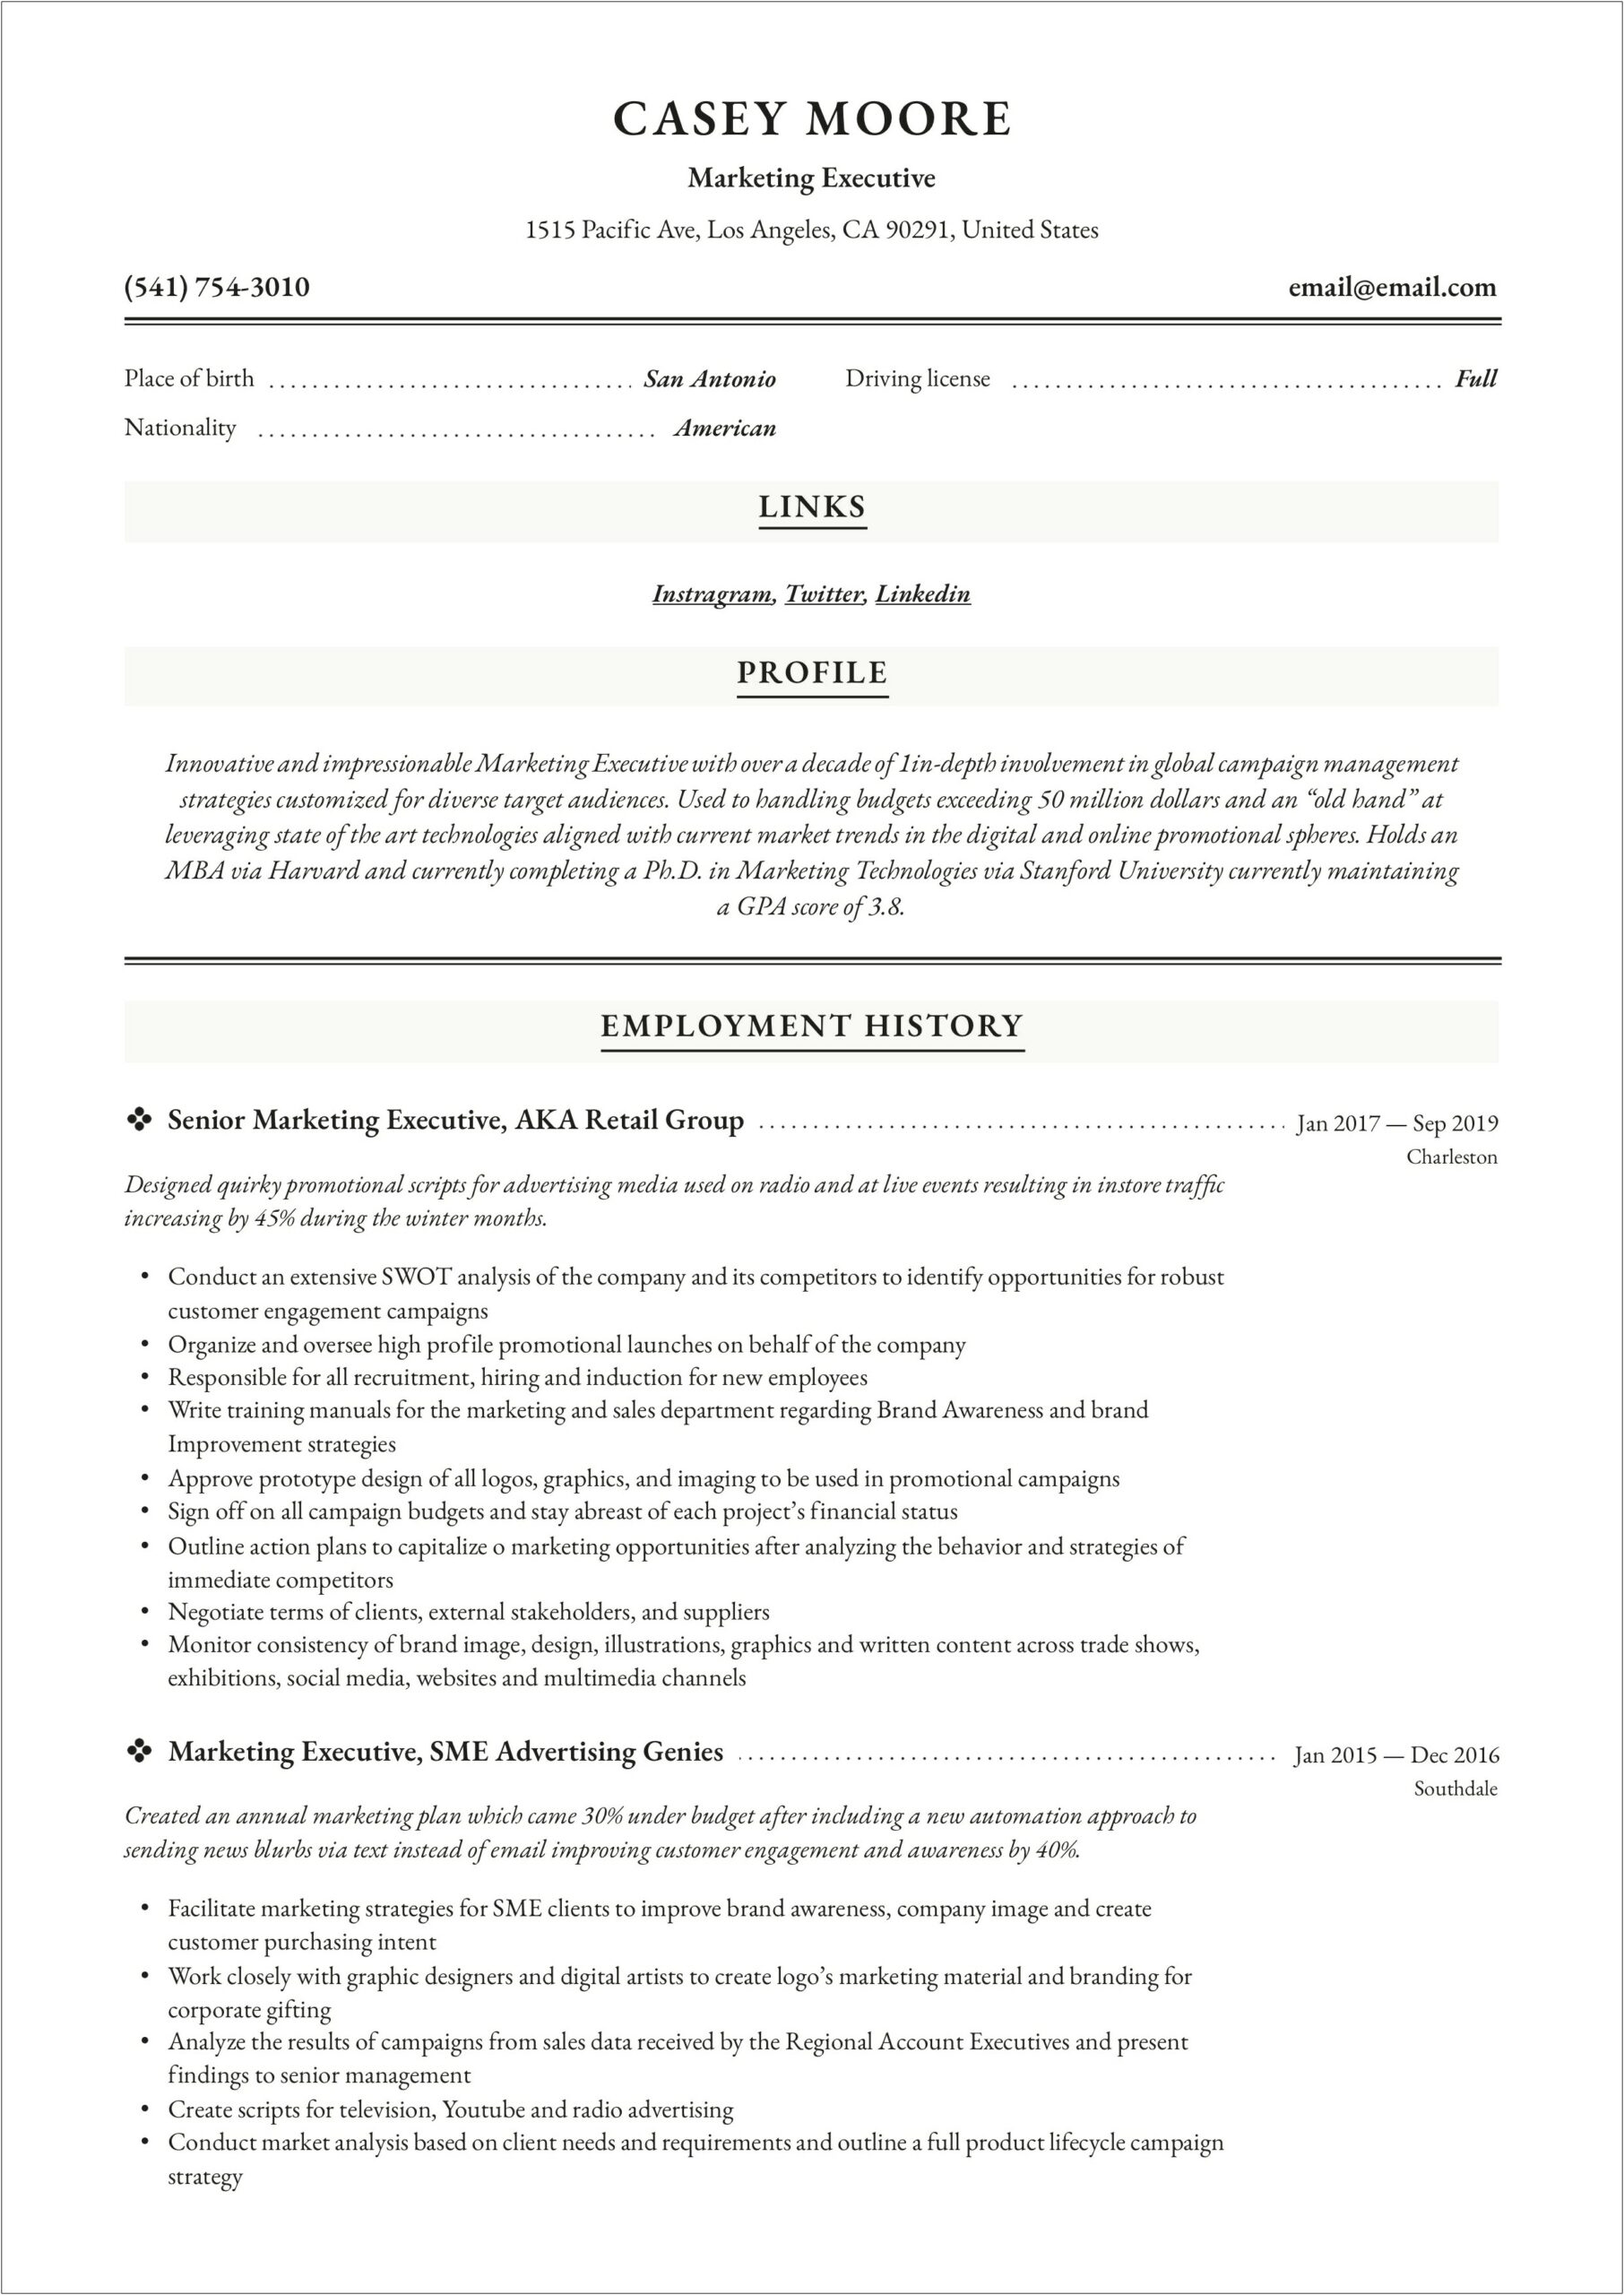 Marketing Executive Job Description For Resume